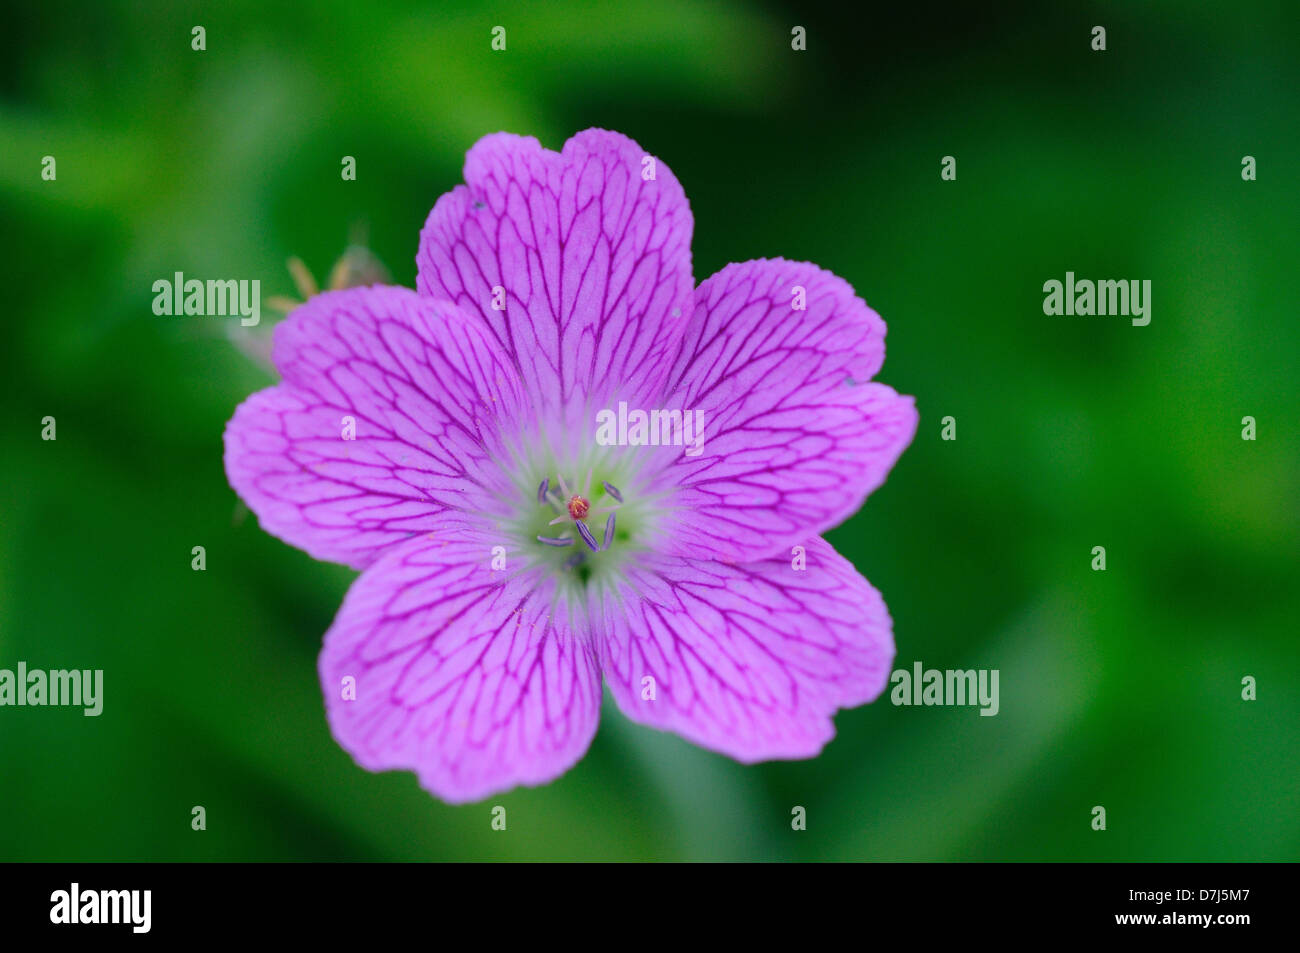 A hardy geranium perennial flower Stock Photo